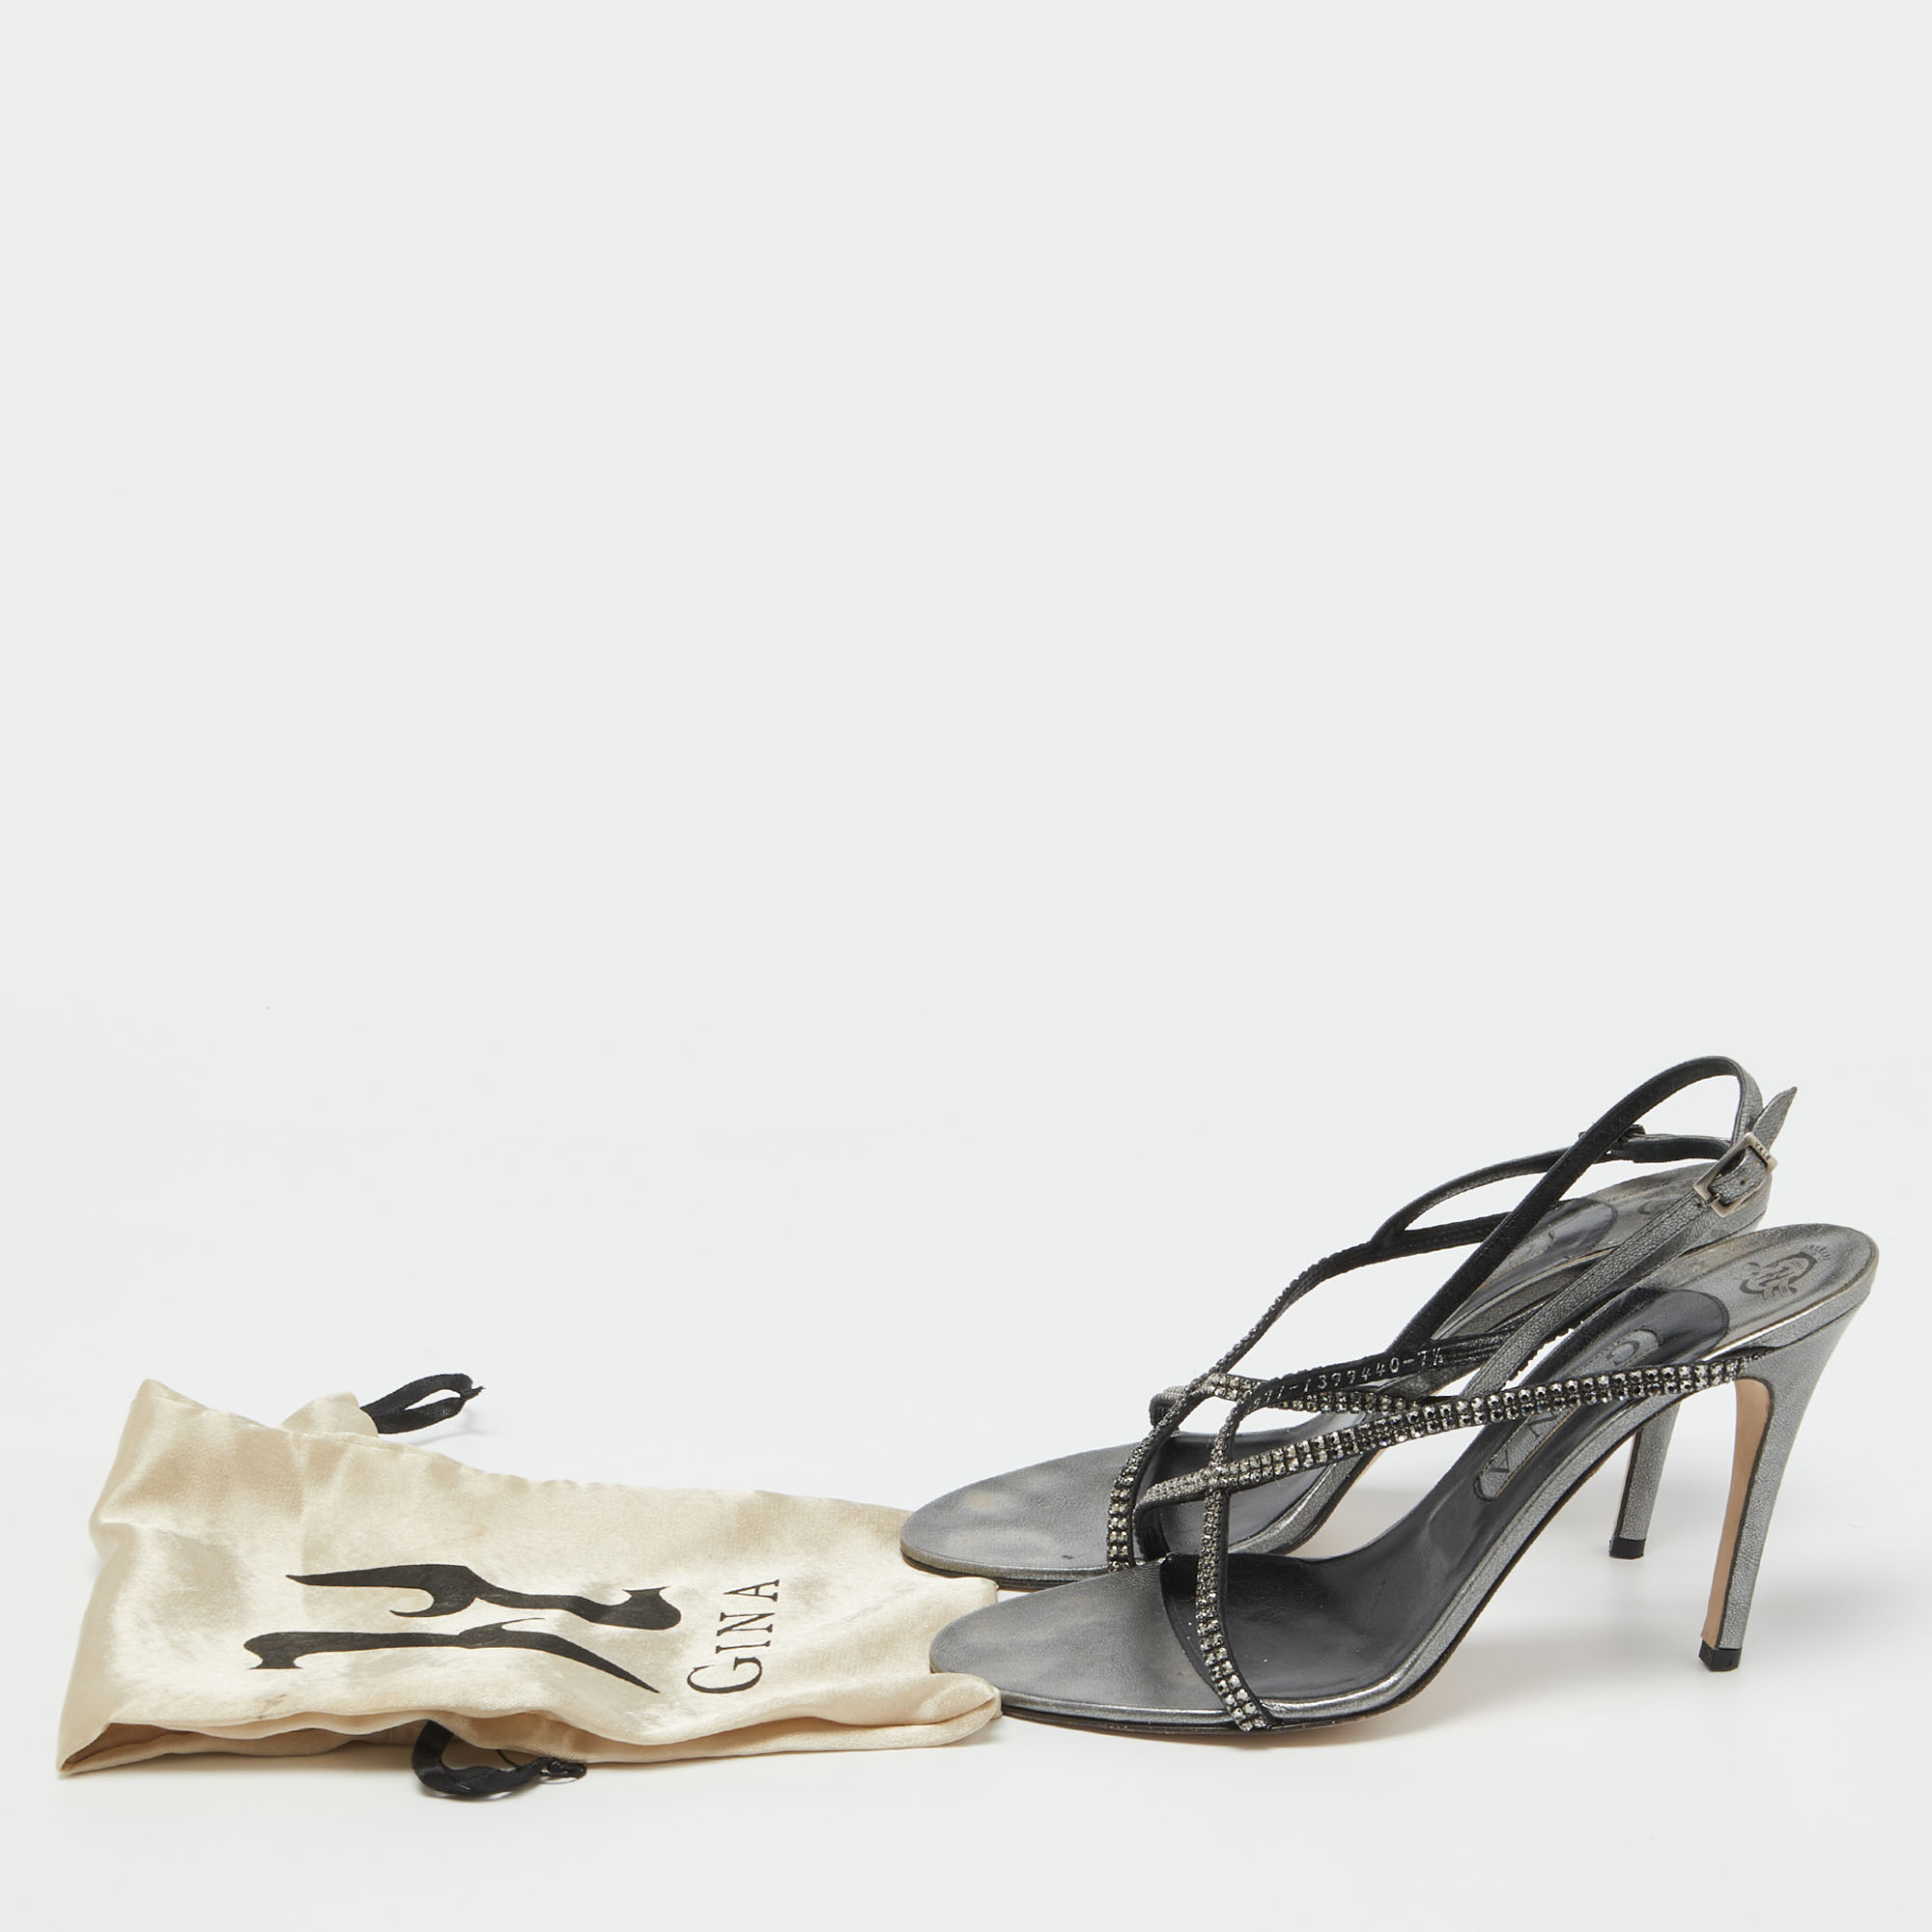 Gina Metallic Grey Leather Crystal Embellished Slingback Sandals Size 39.5